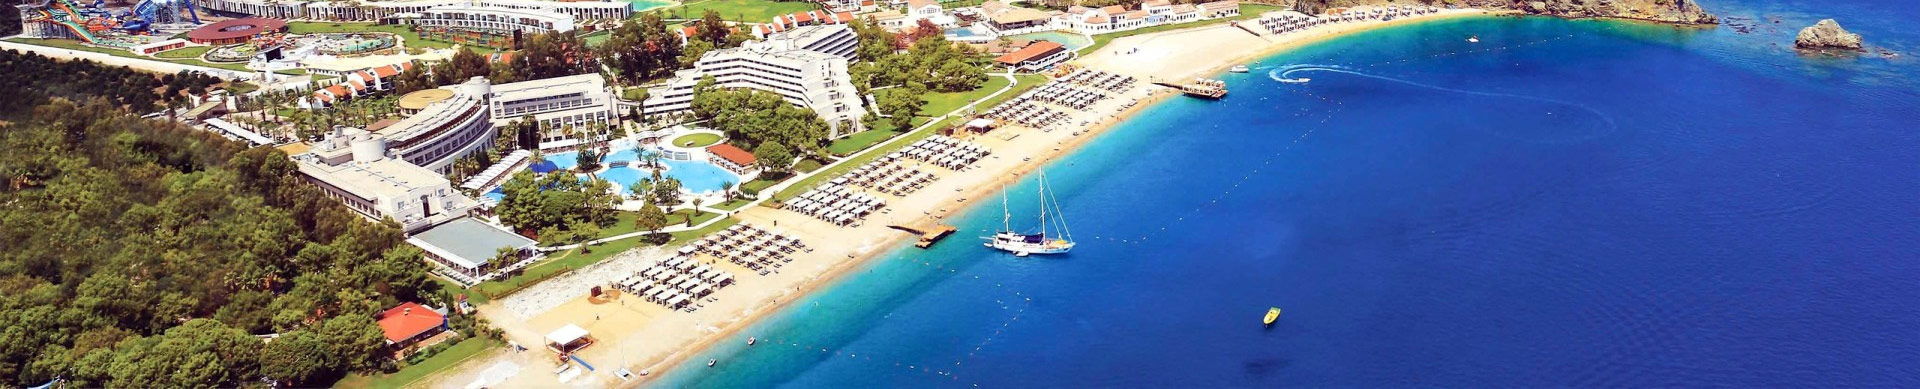 Tekirova transfert aéroport en taxi de / à l'hôtel de vacances transferts aéroport d'Antalya vacances voyage Turquie